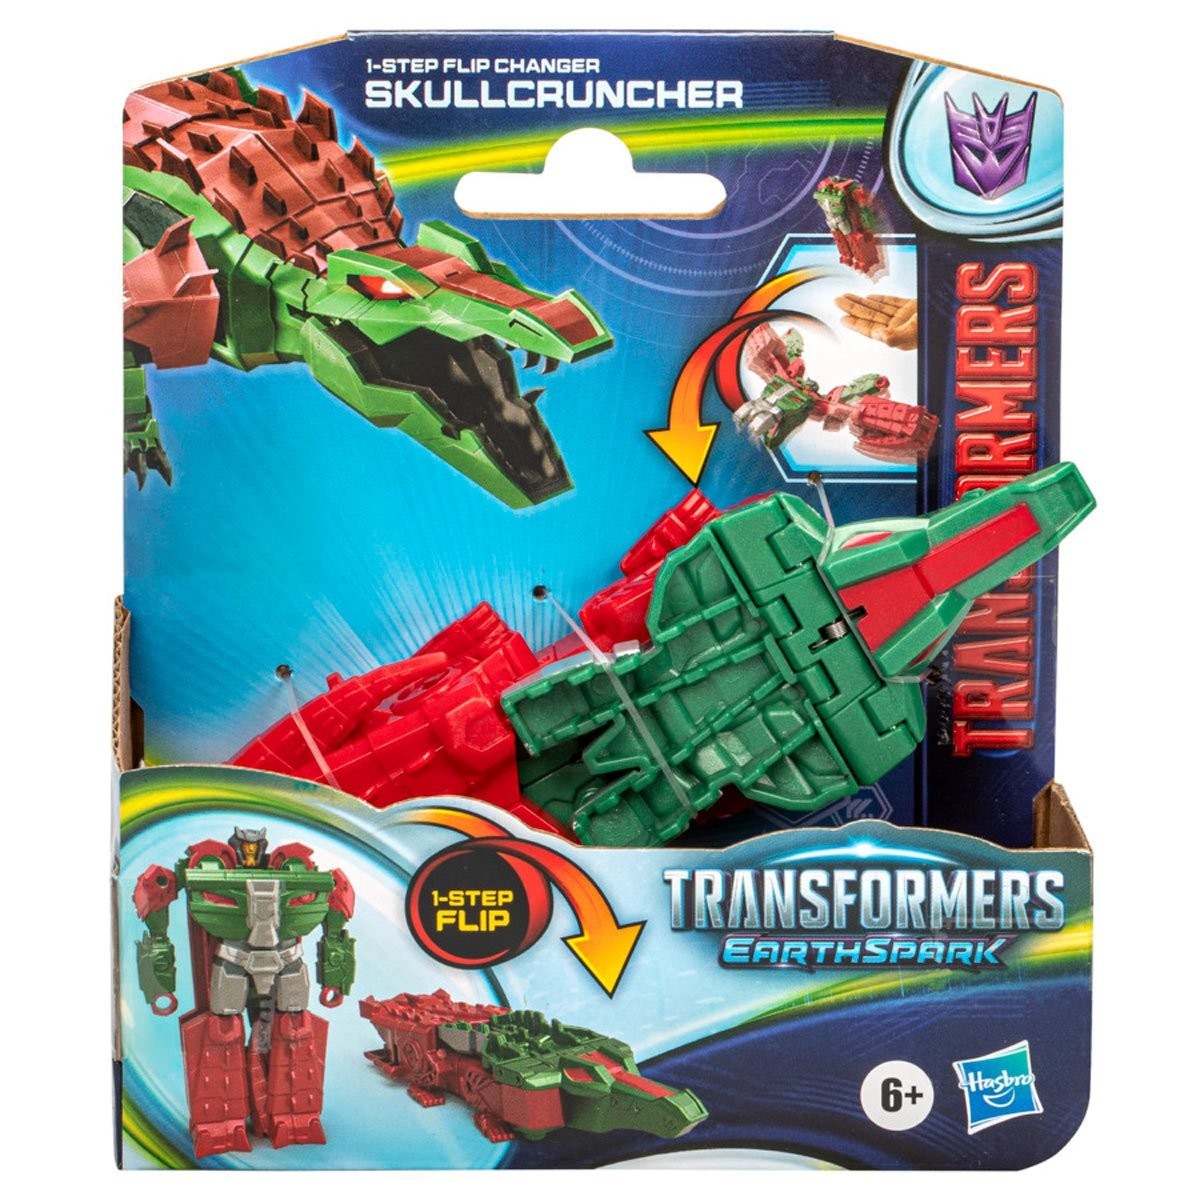 Transformers News: First Look at New Earthspark Toys Including Skullcruncher